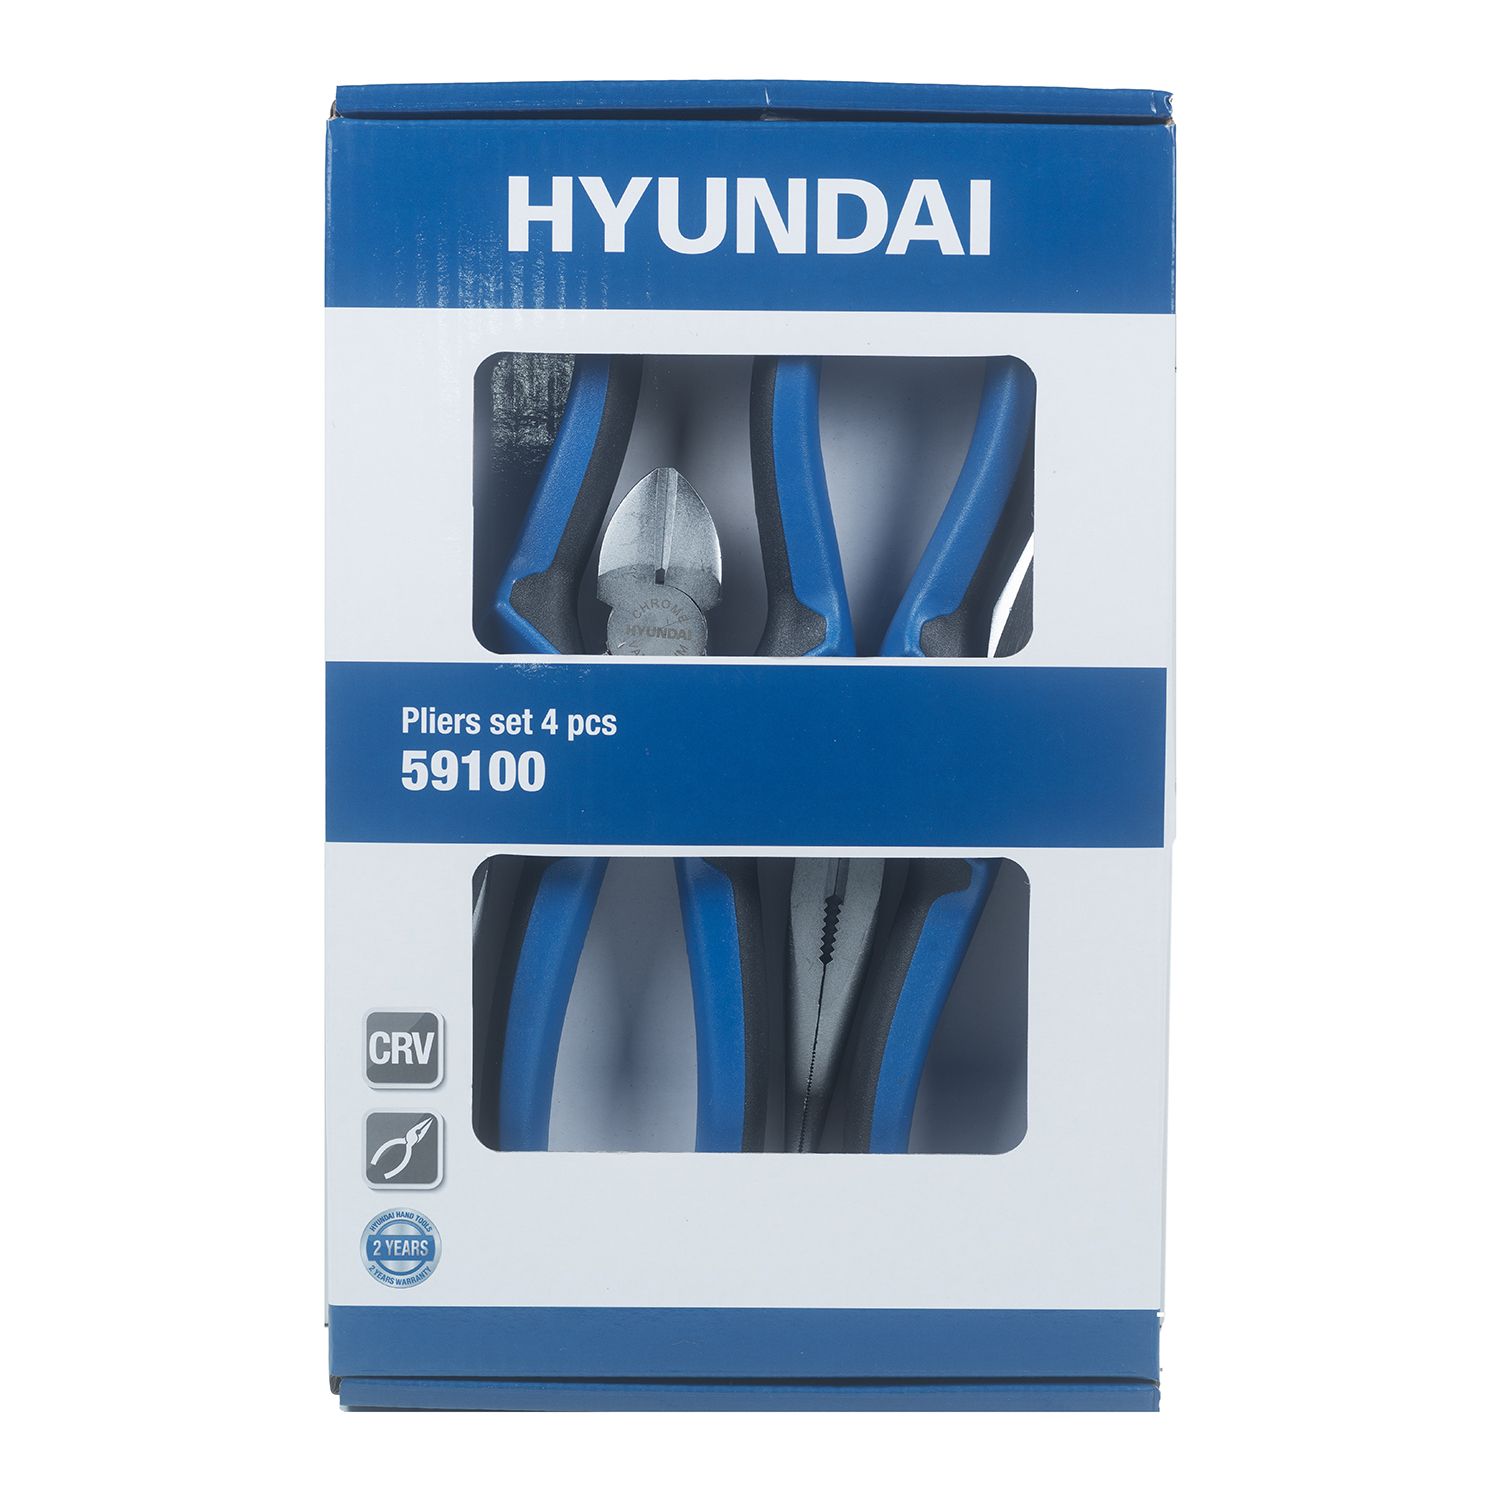  Hyundai plier set 4 pcs